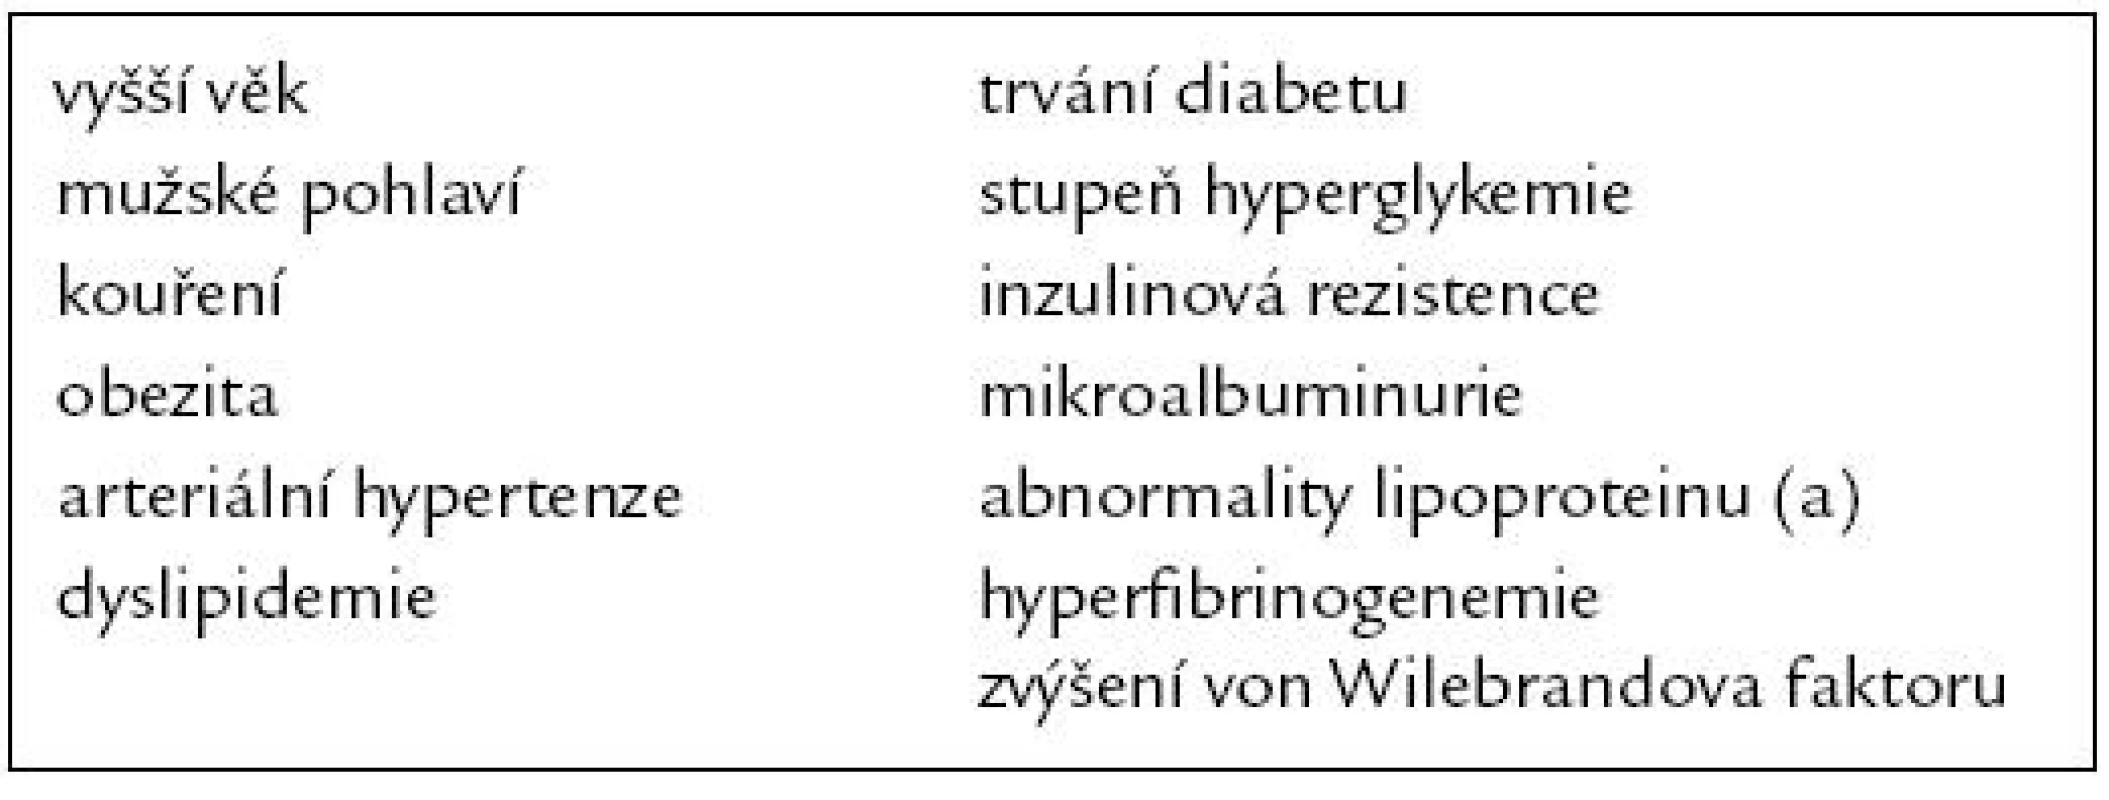 Rizikové faktory ICHDK u diabetu.